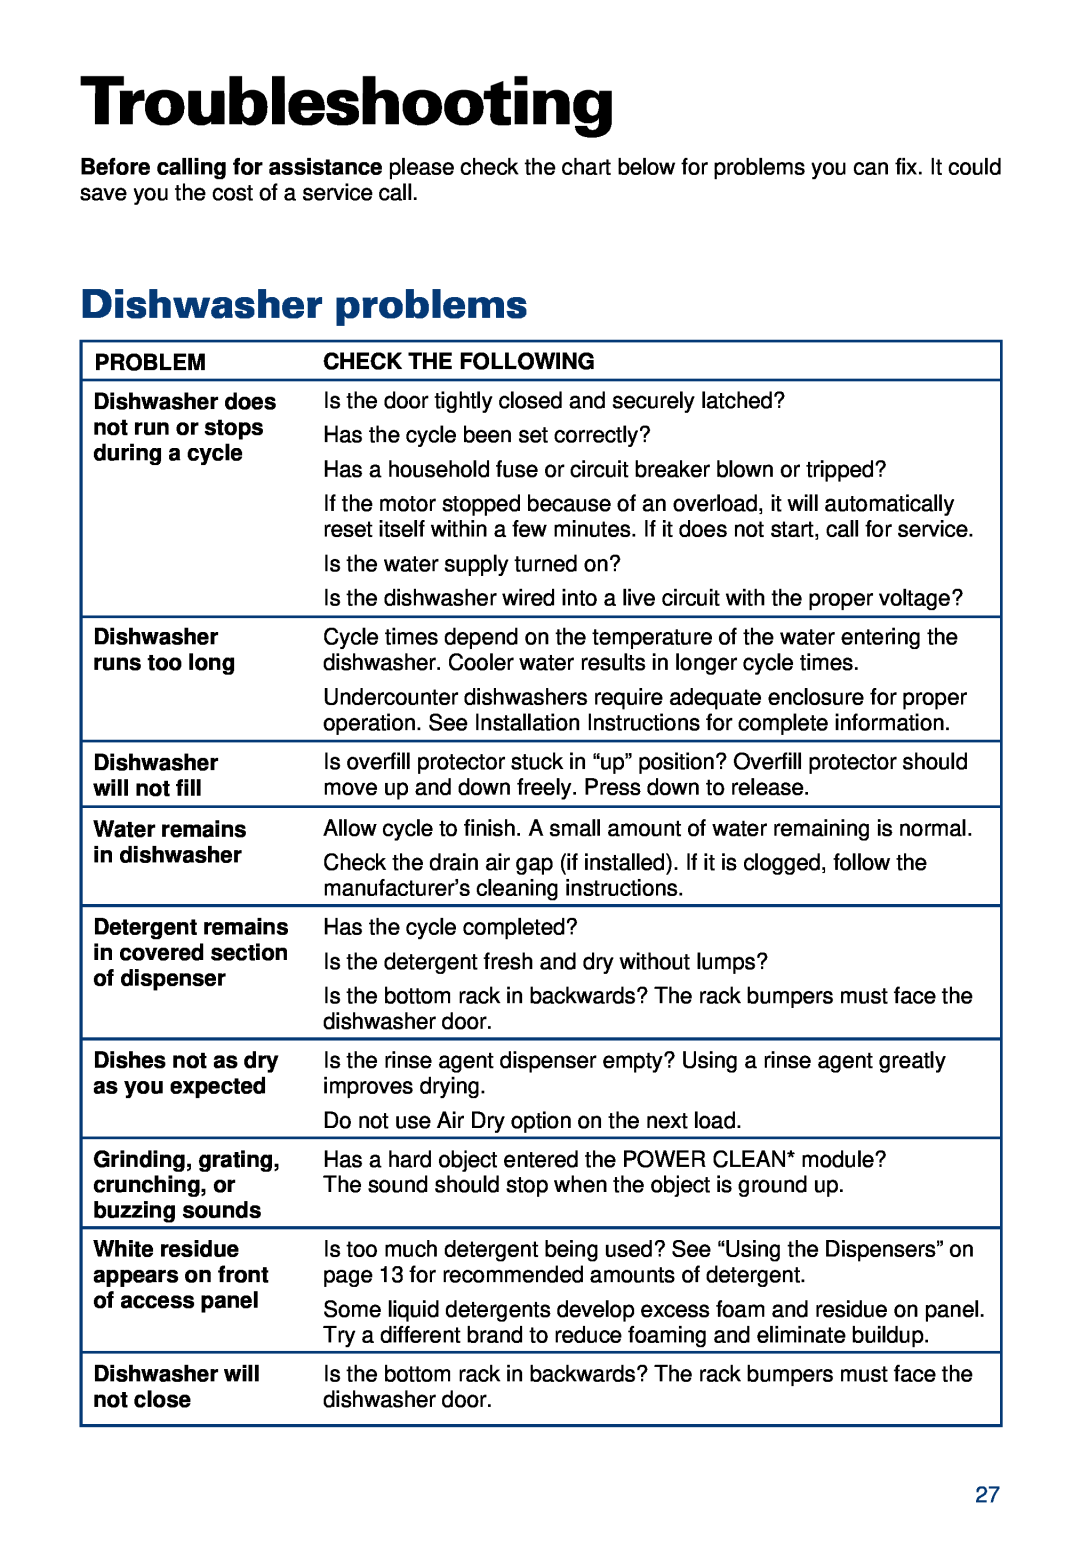 Whirlpool 900 warranty Troubleshooting, Dishwasher problems 